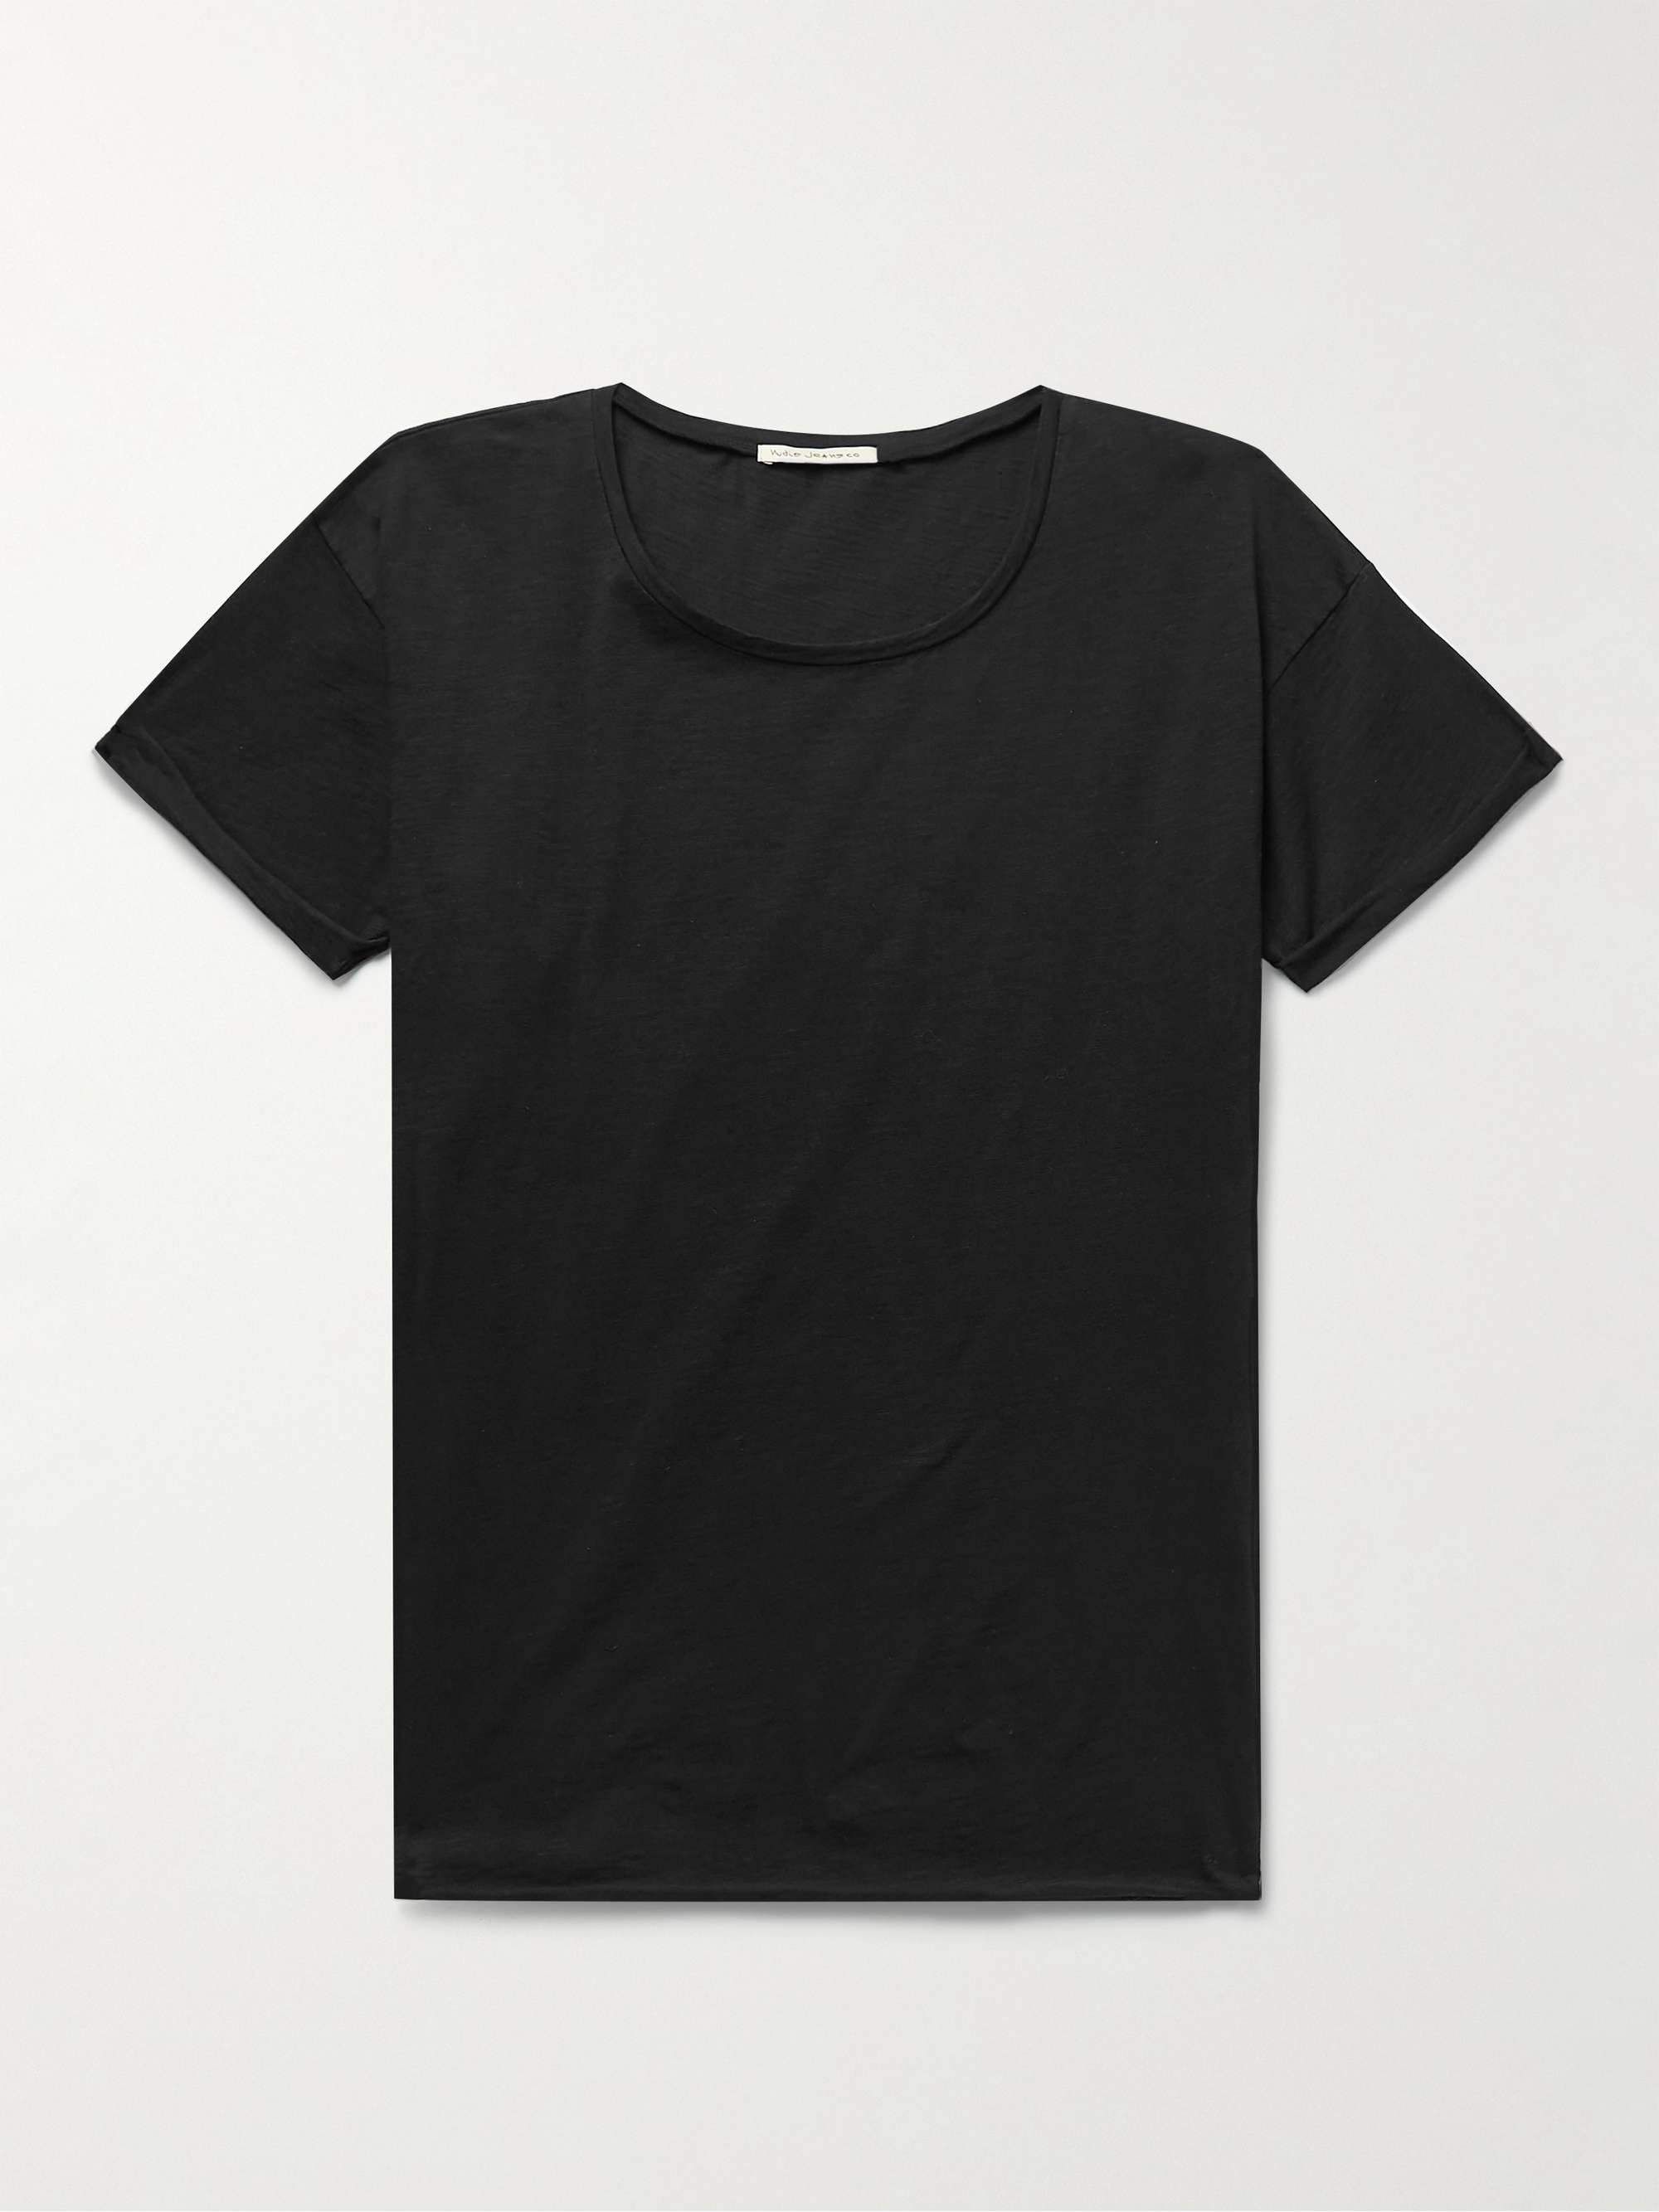 NUDIE JEANS Roger Slub Organic Cotton-Jersey T-Shirt | MR PORTER